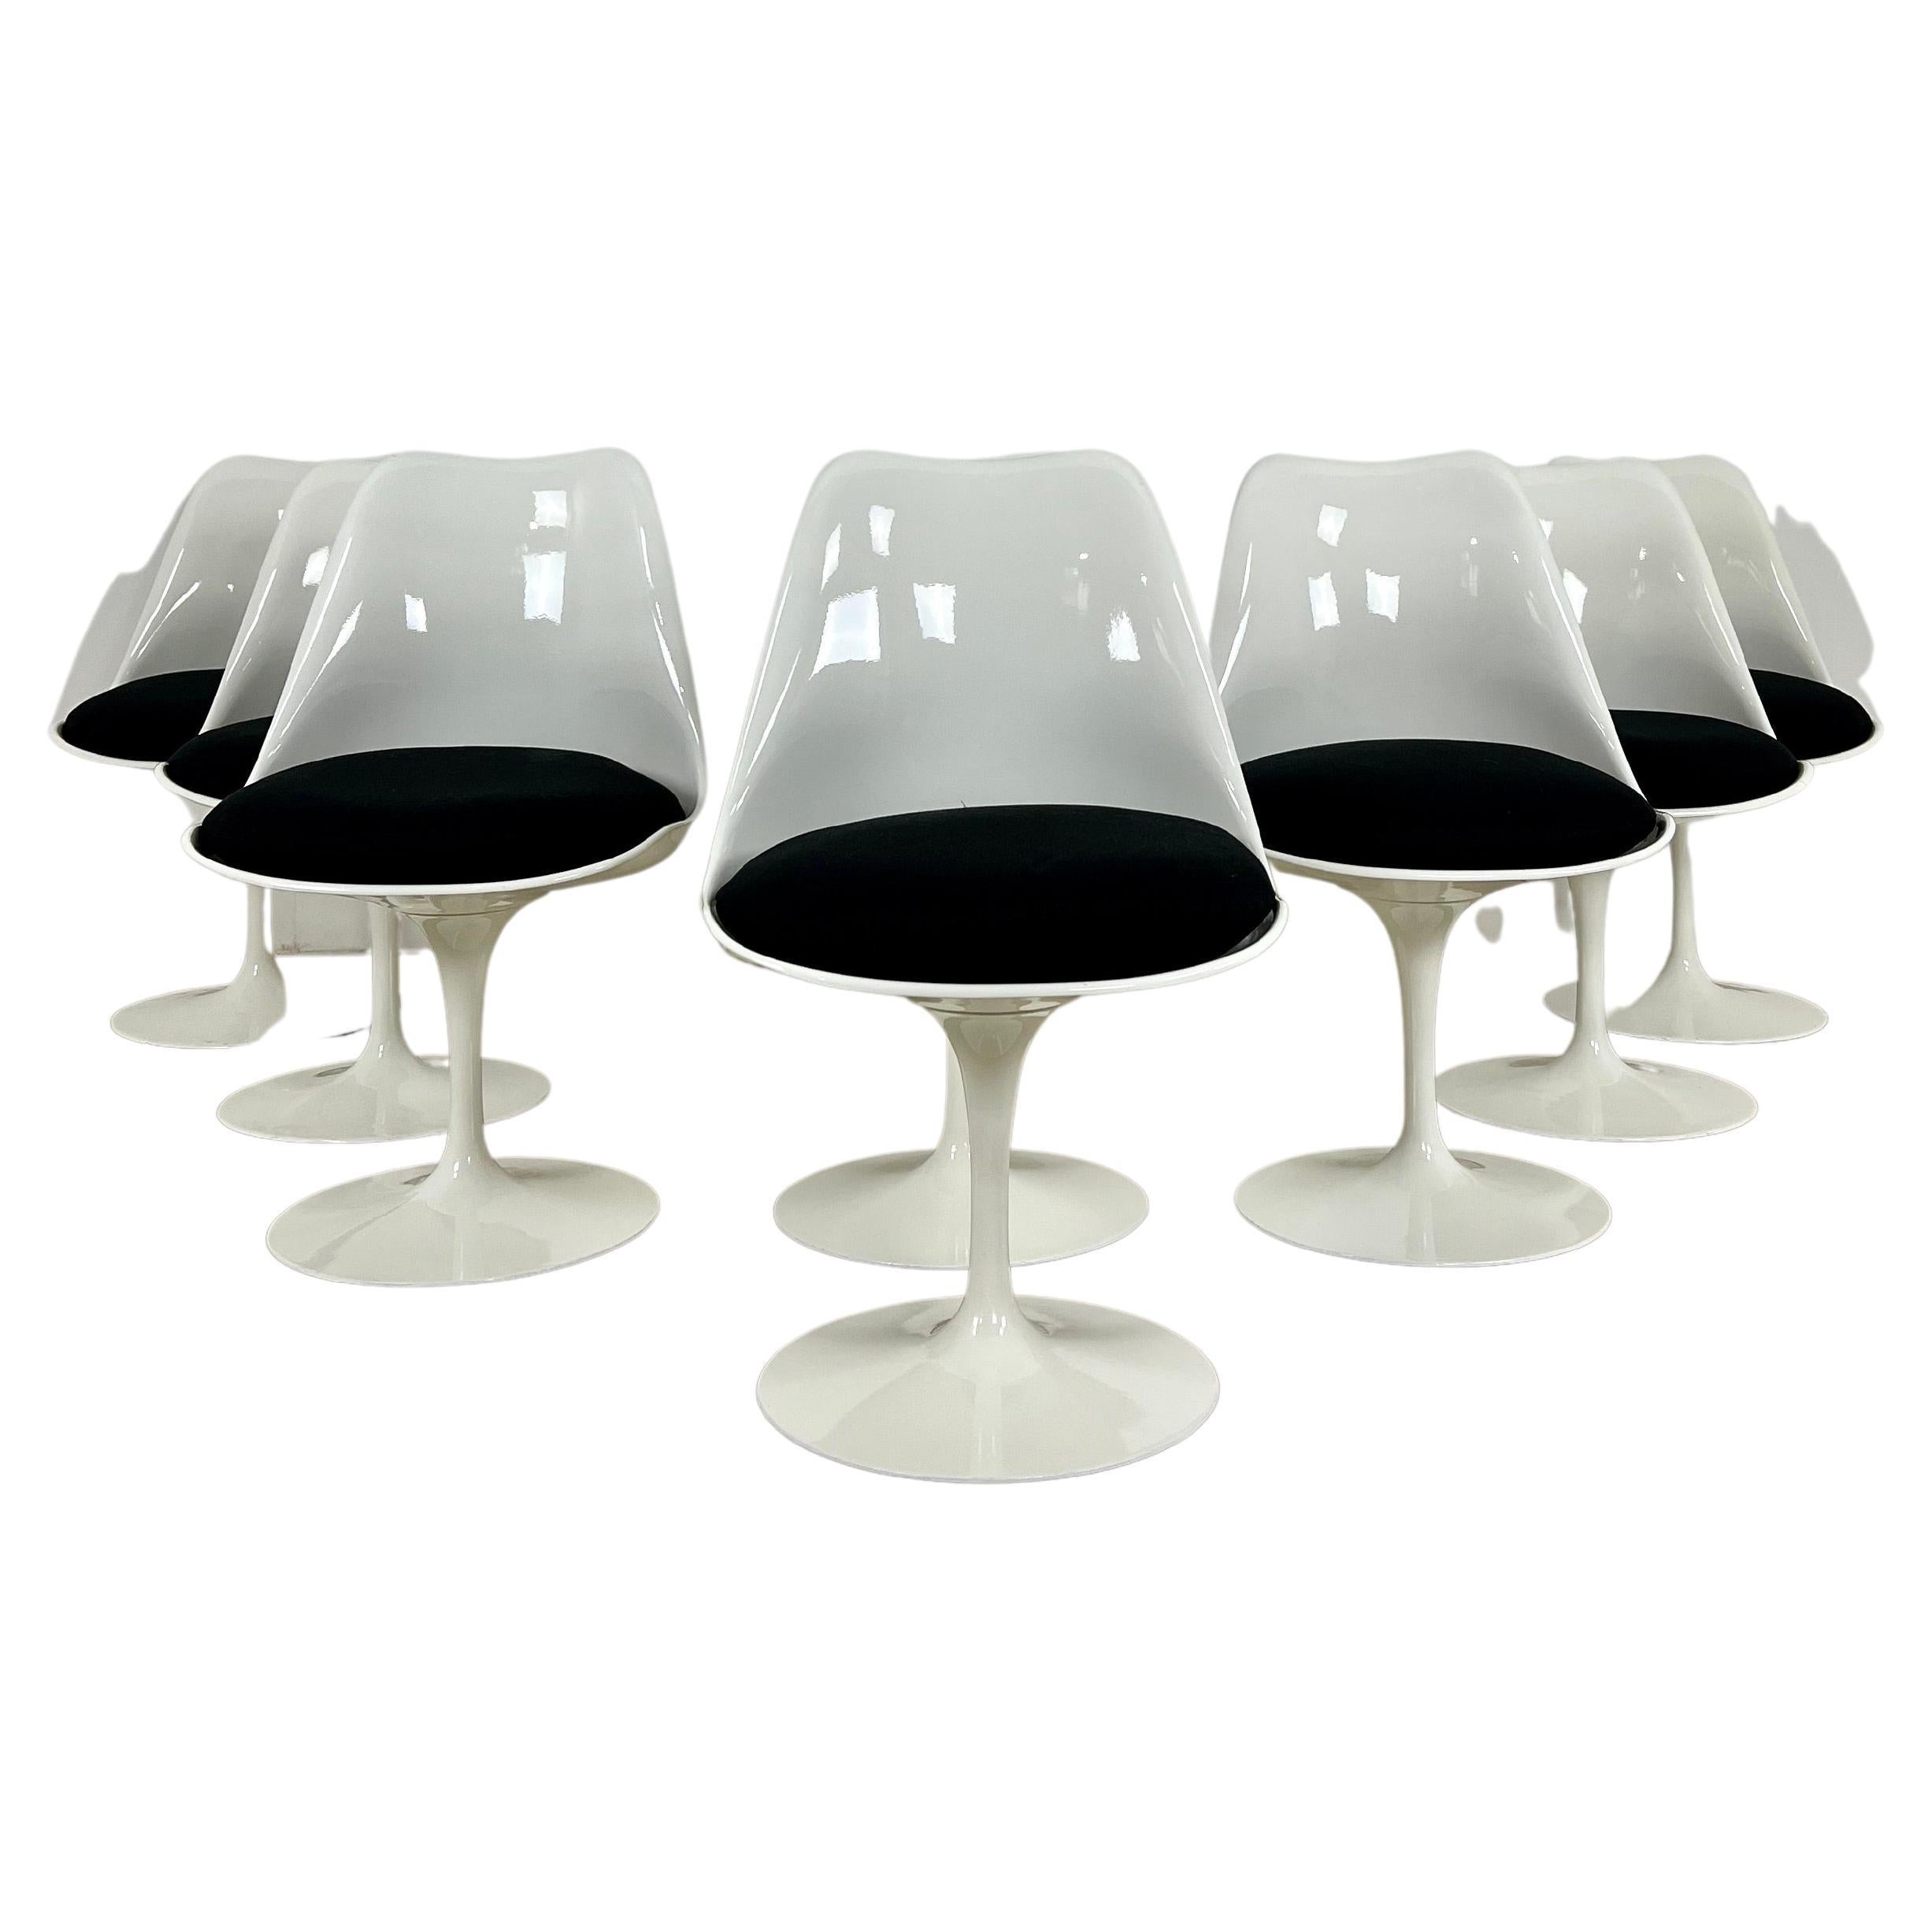 Tulip Dining Chairs by Eero Saarinen for Knoll International, 1970s